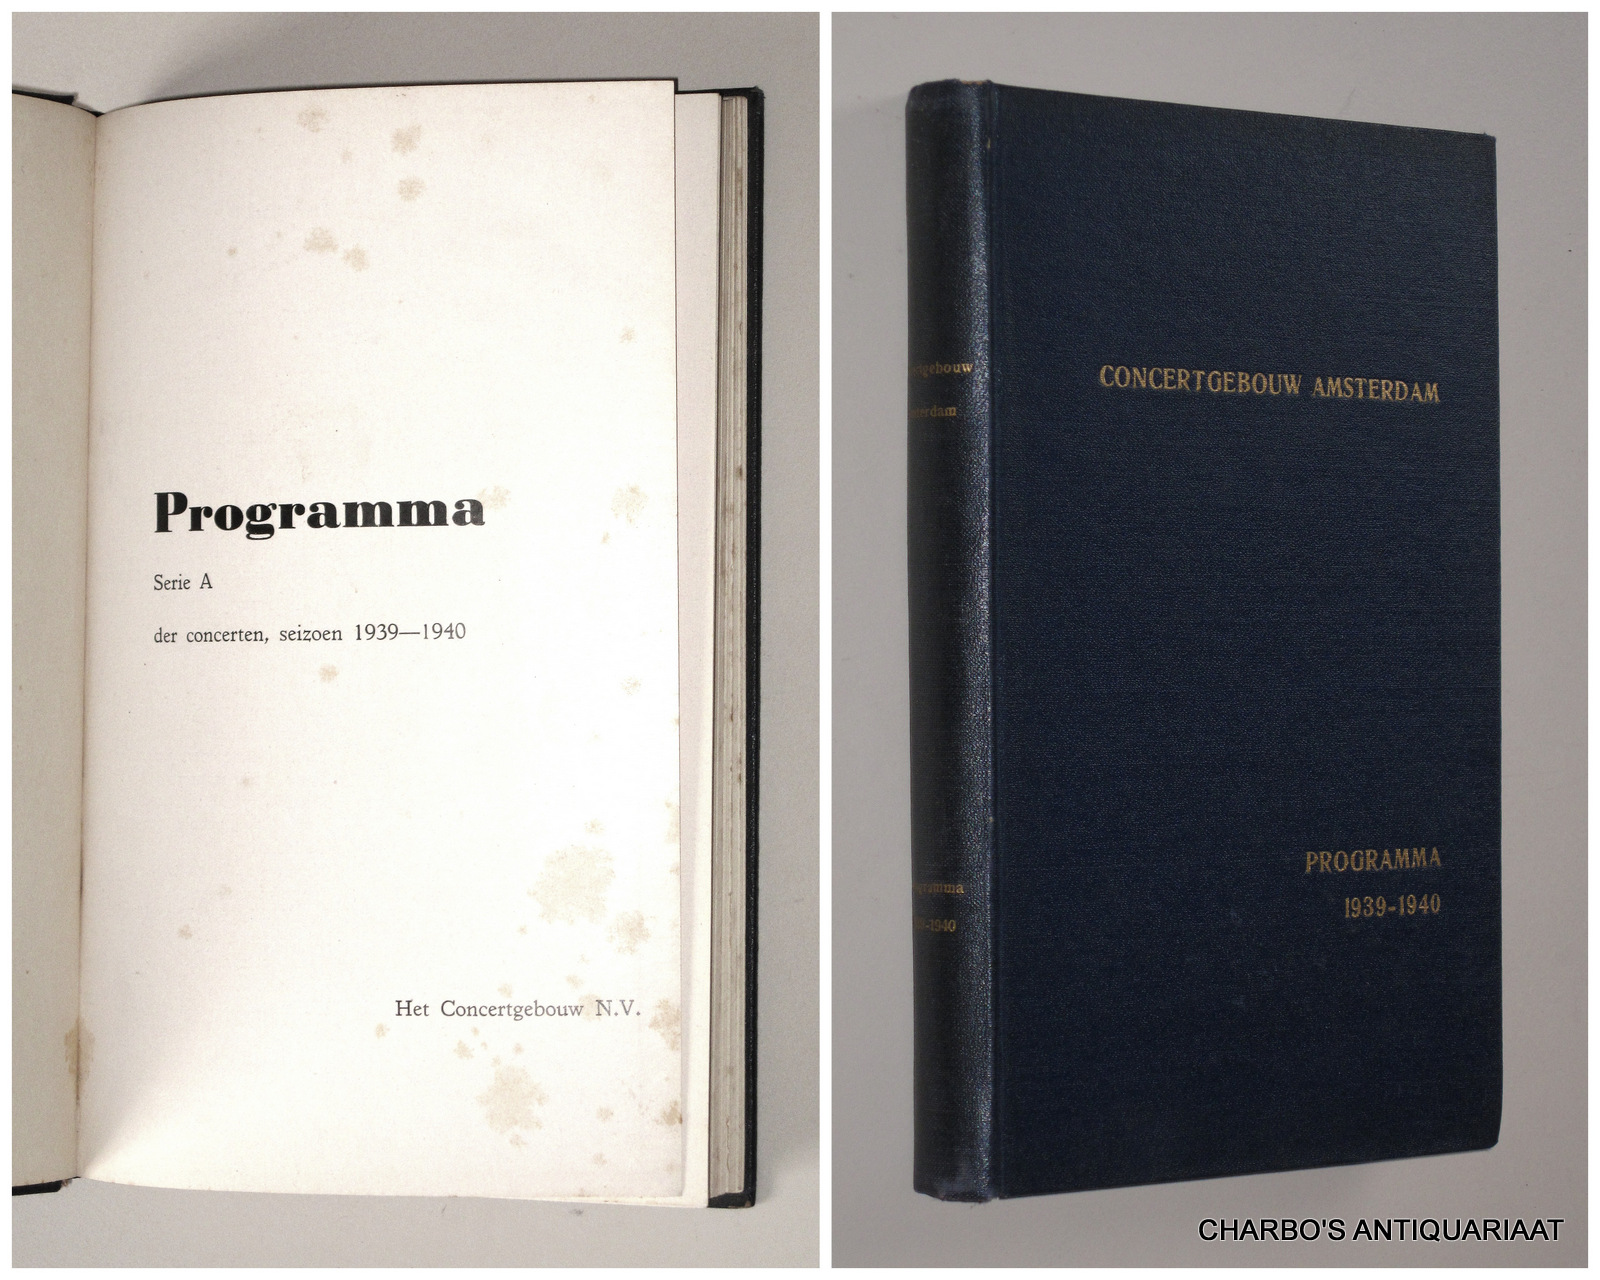 CONCERTGEBOUW, N.V. HET, -  Programma (serie A) der concerten seizoen 1939-1940.